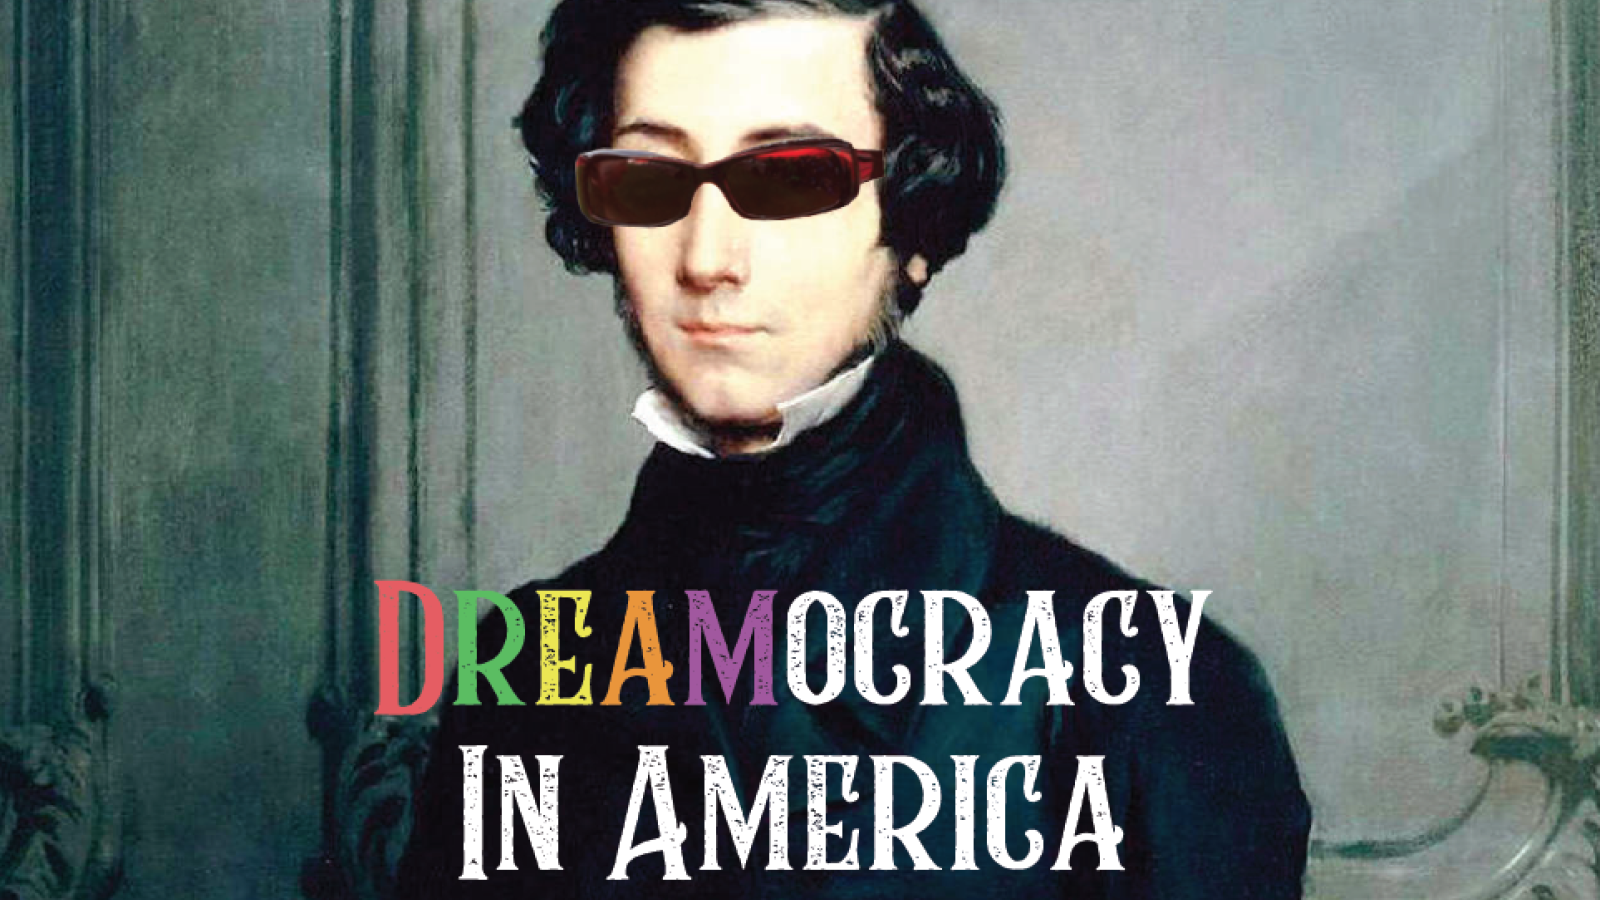 Dreamocracy in America, 2019